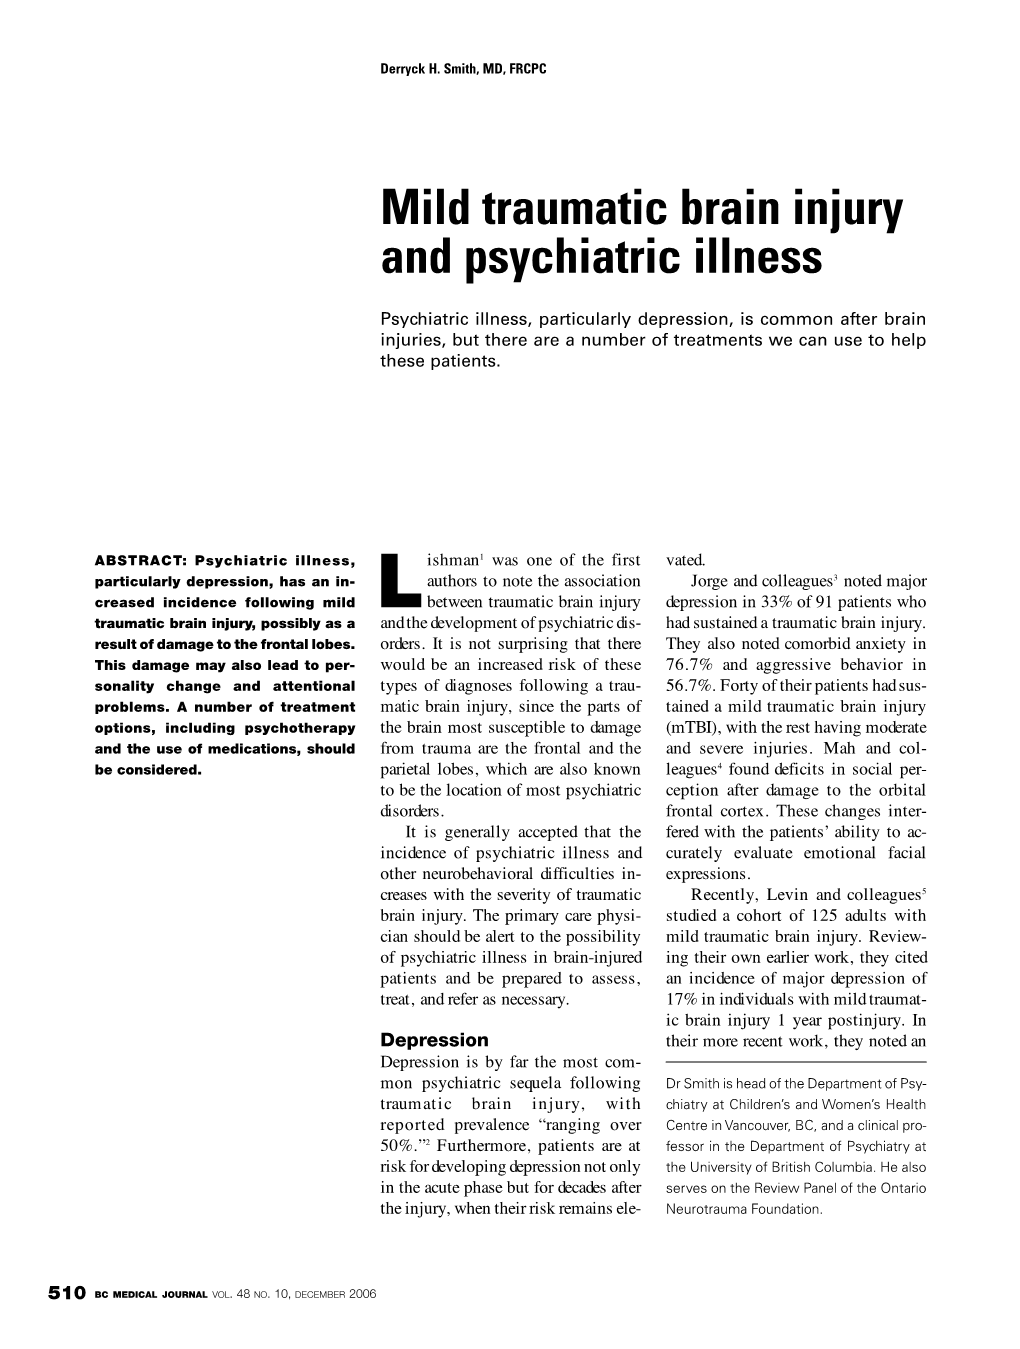 Mild Traumatic Brain Injury and Psychiatric Illness